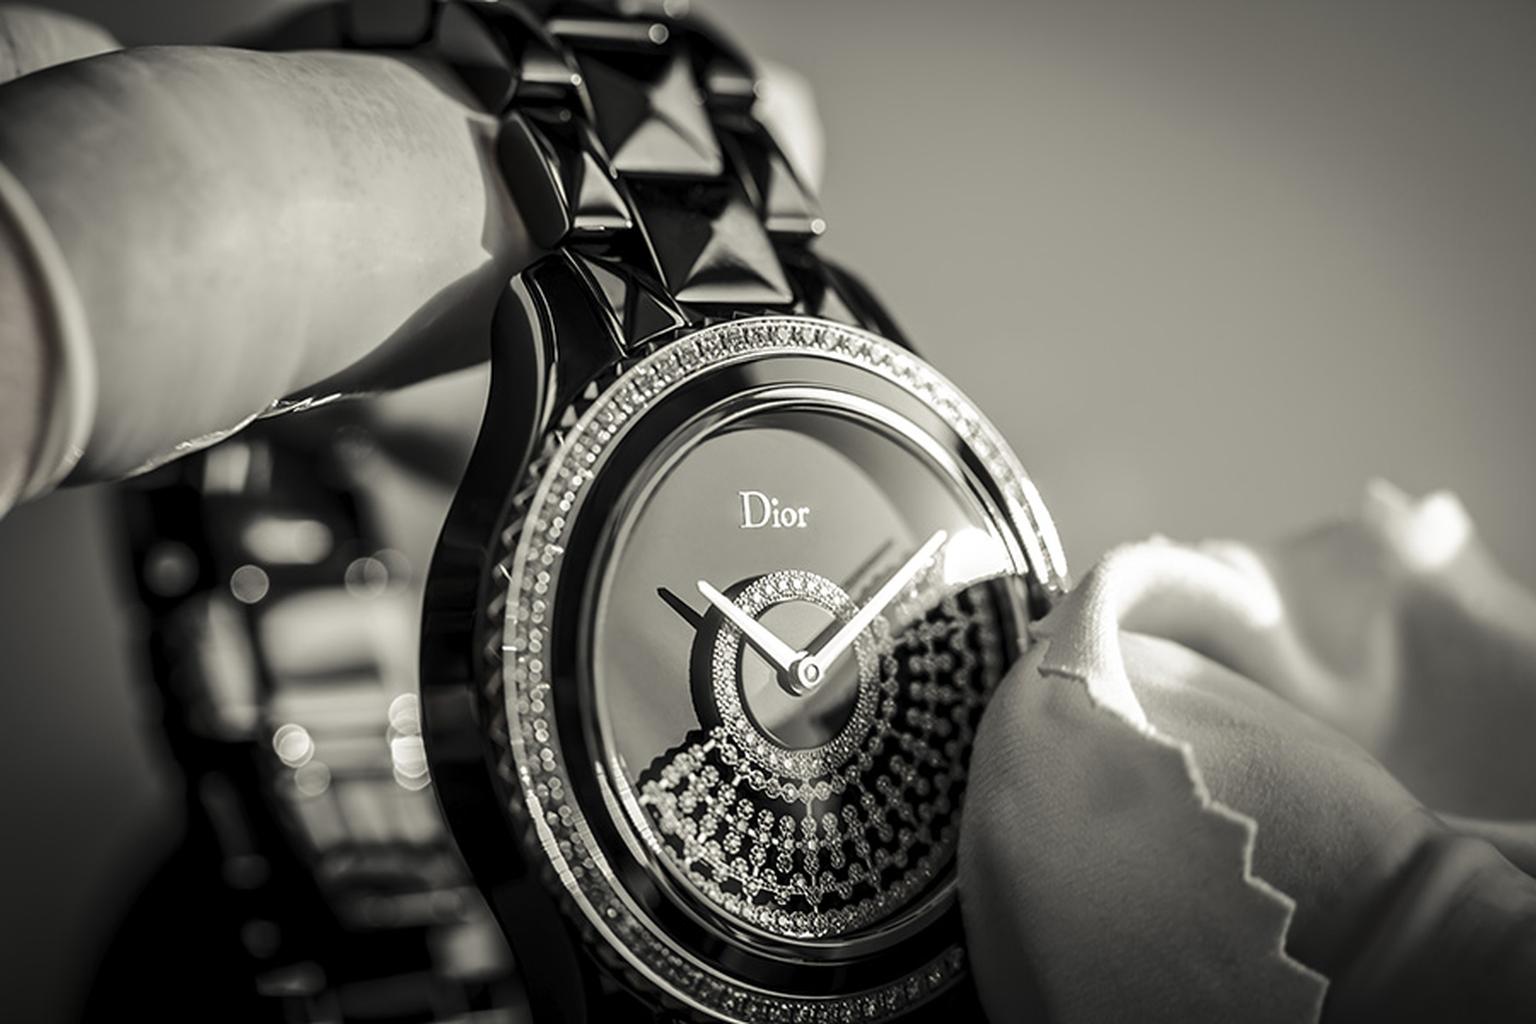 DiorVIII-Aesthetic-check-of-the-tiemepiece.jpg